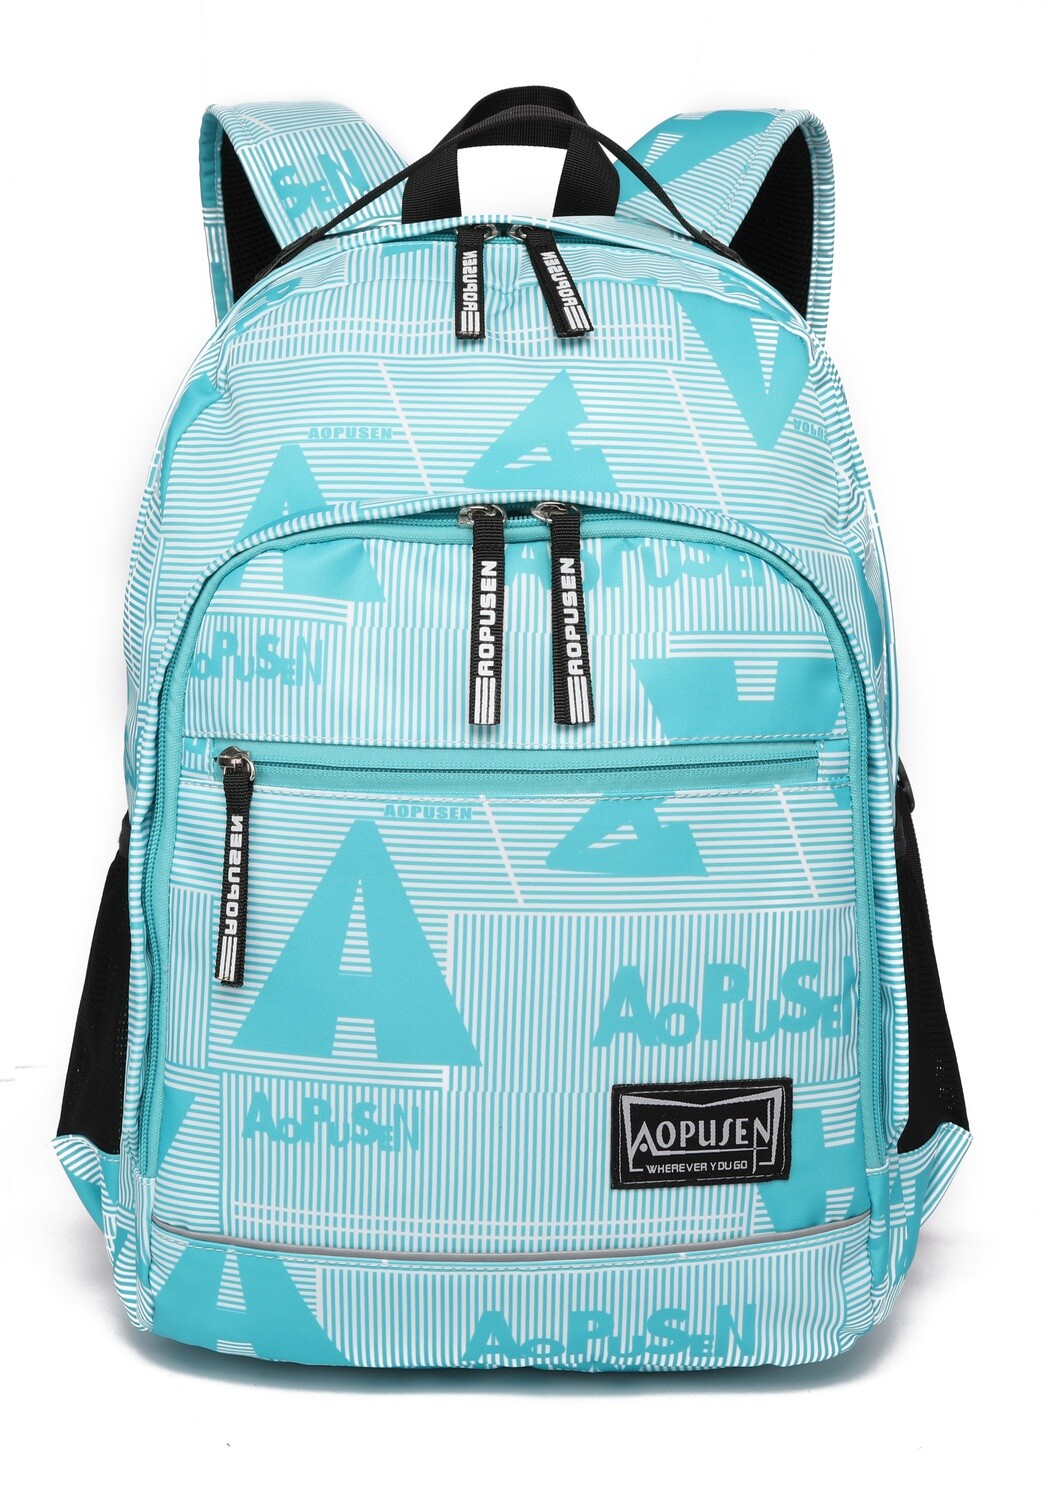 Backpack for Kids (Primary Grade)